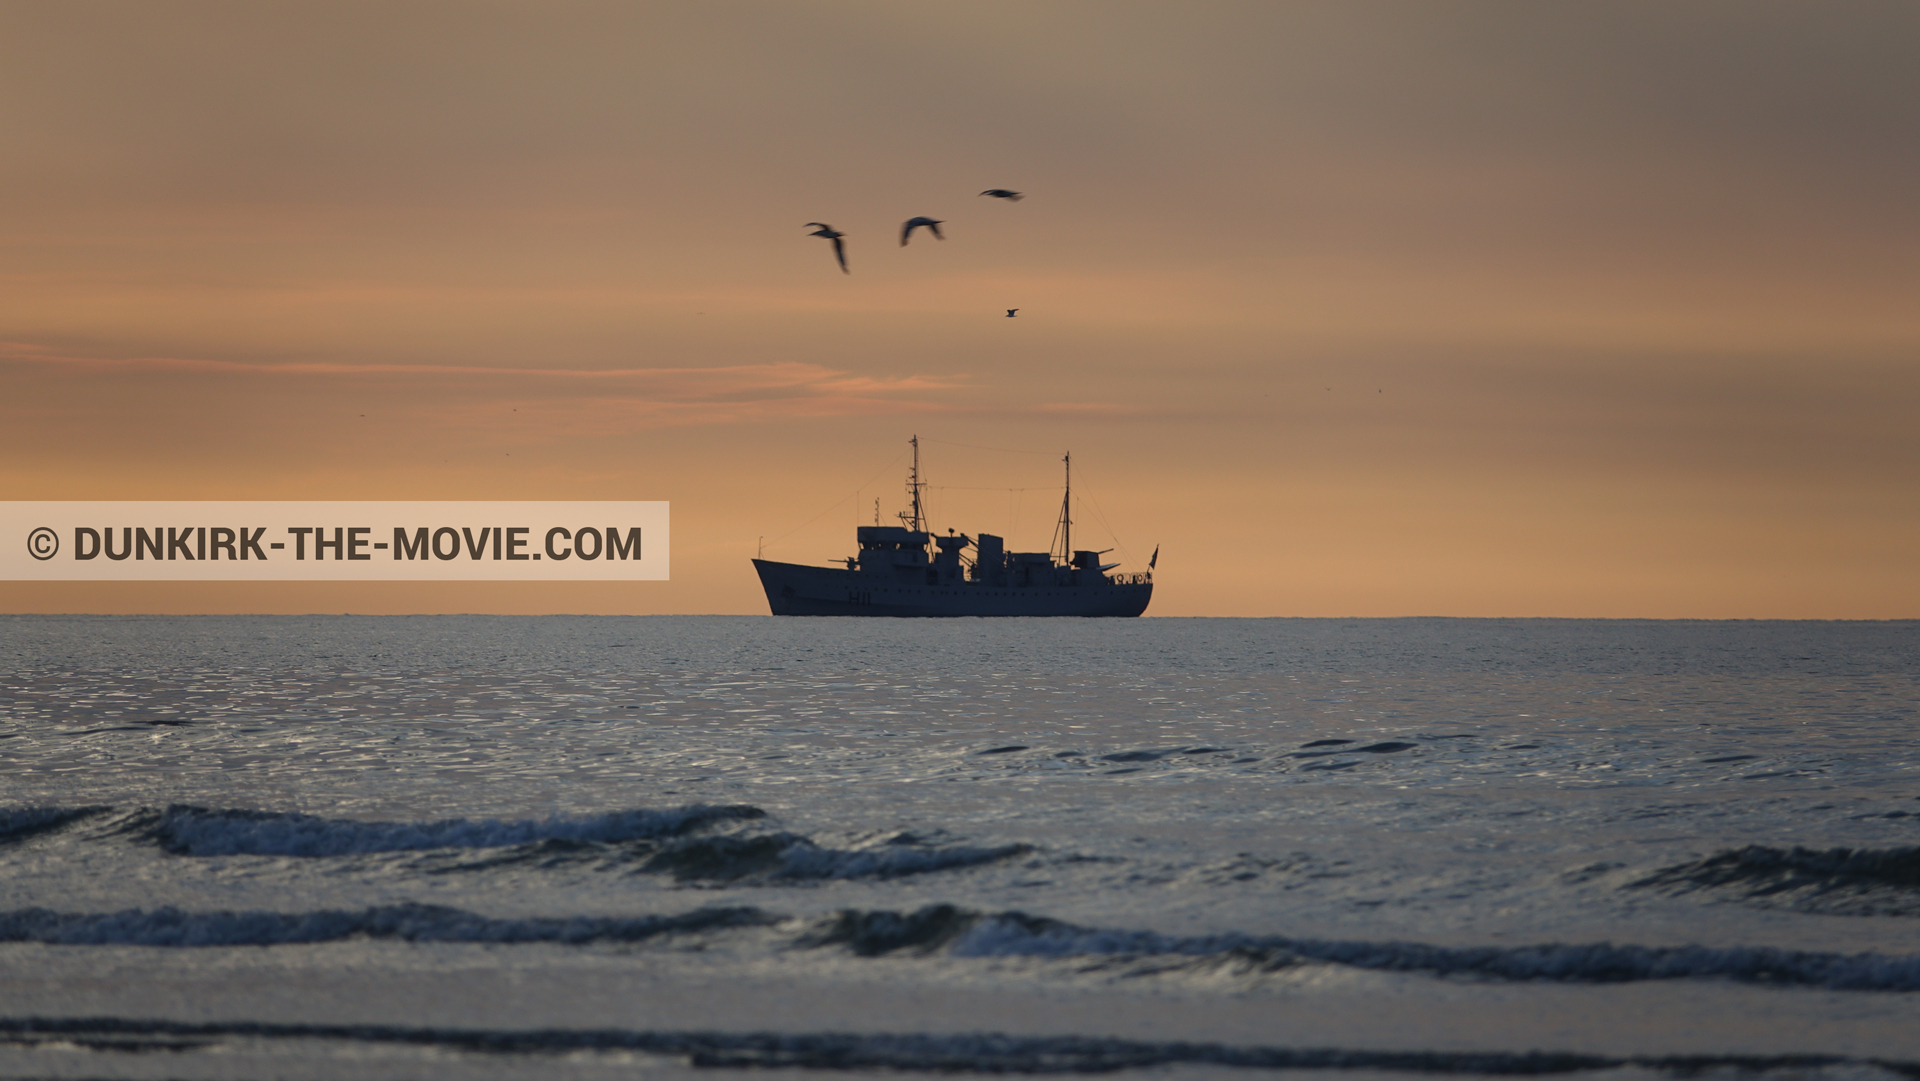 Photo avec bateau, ciel orangé, mer calme, H11 - MLV Castor,  des dessous du Film Dunkerque de Nolan